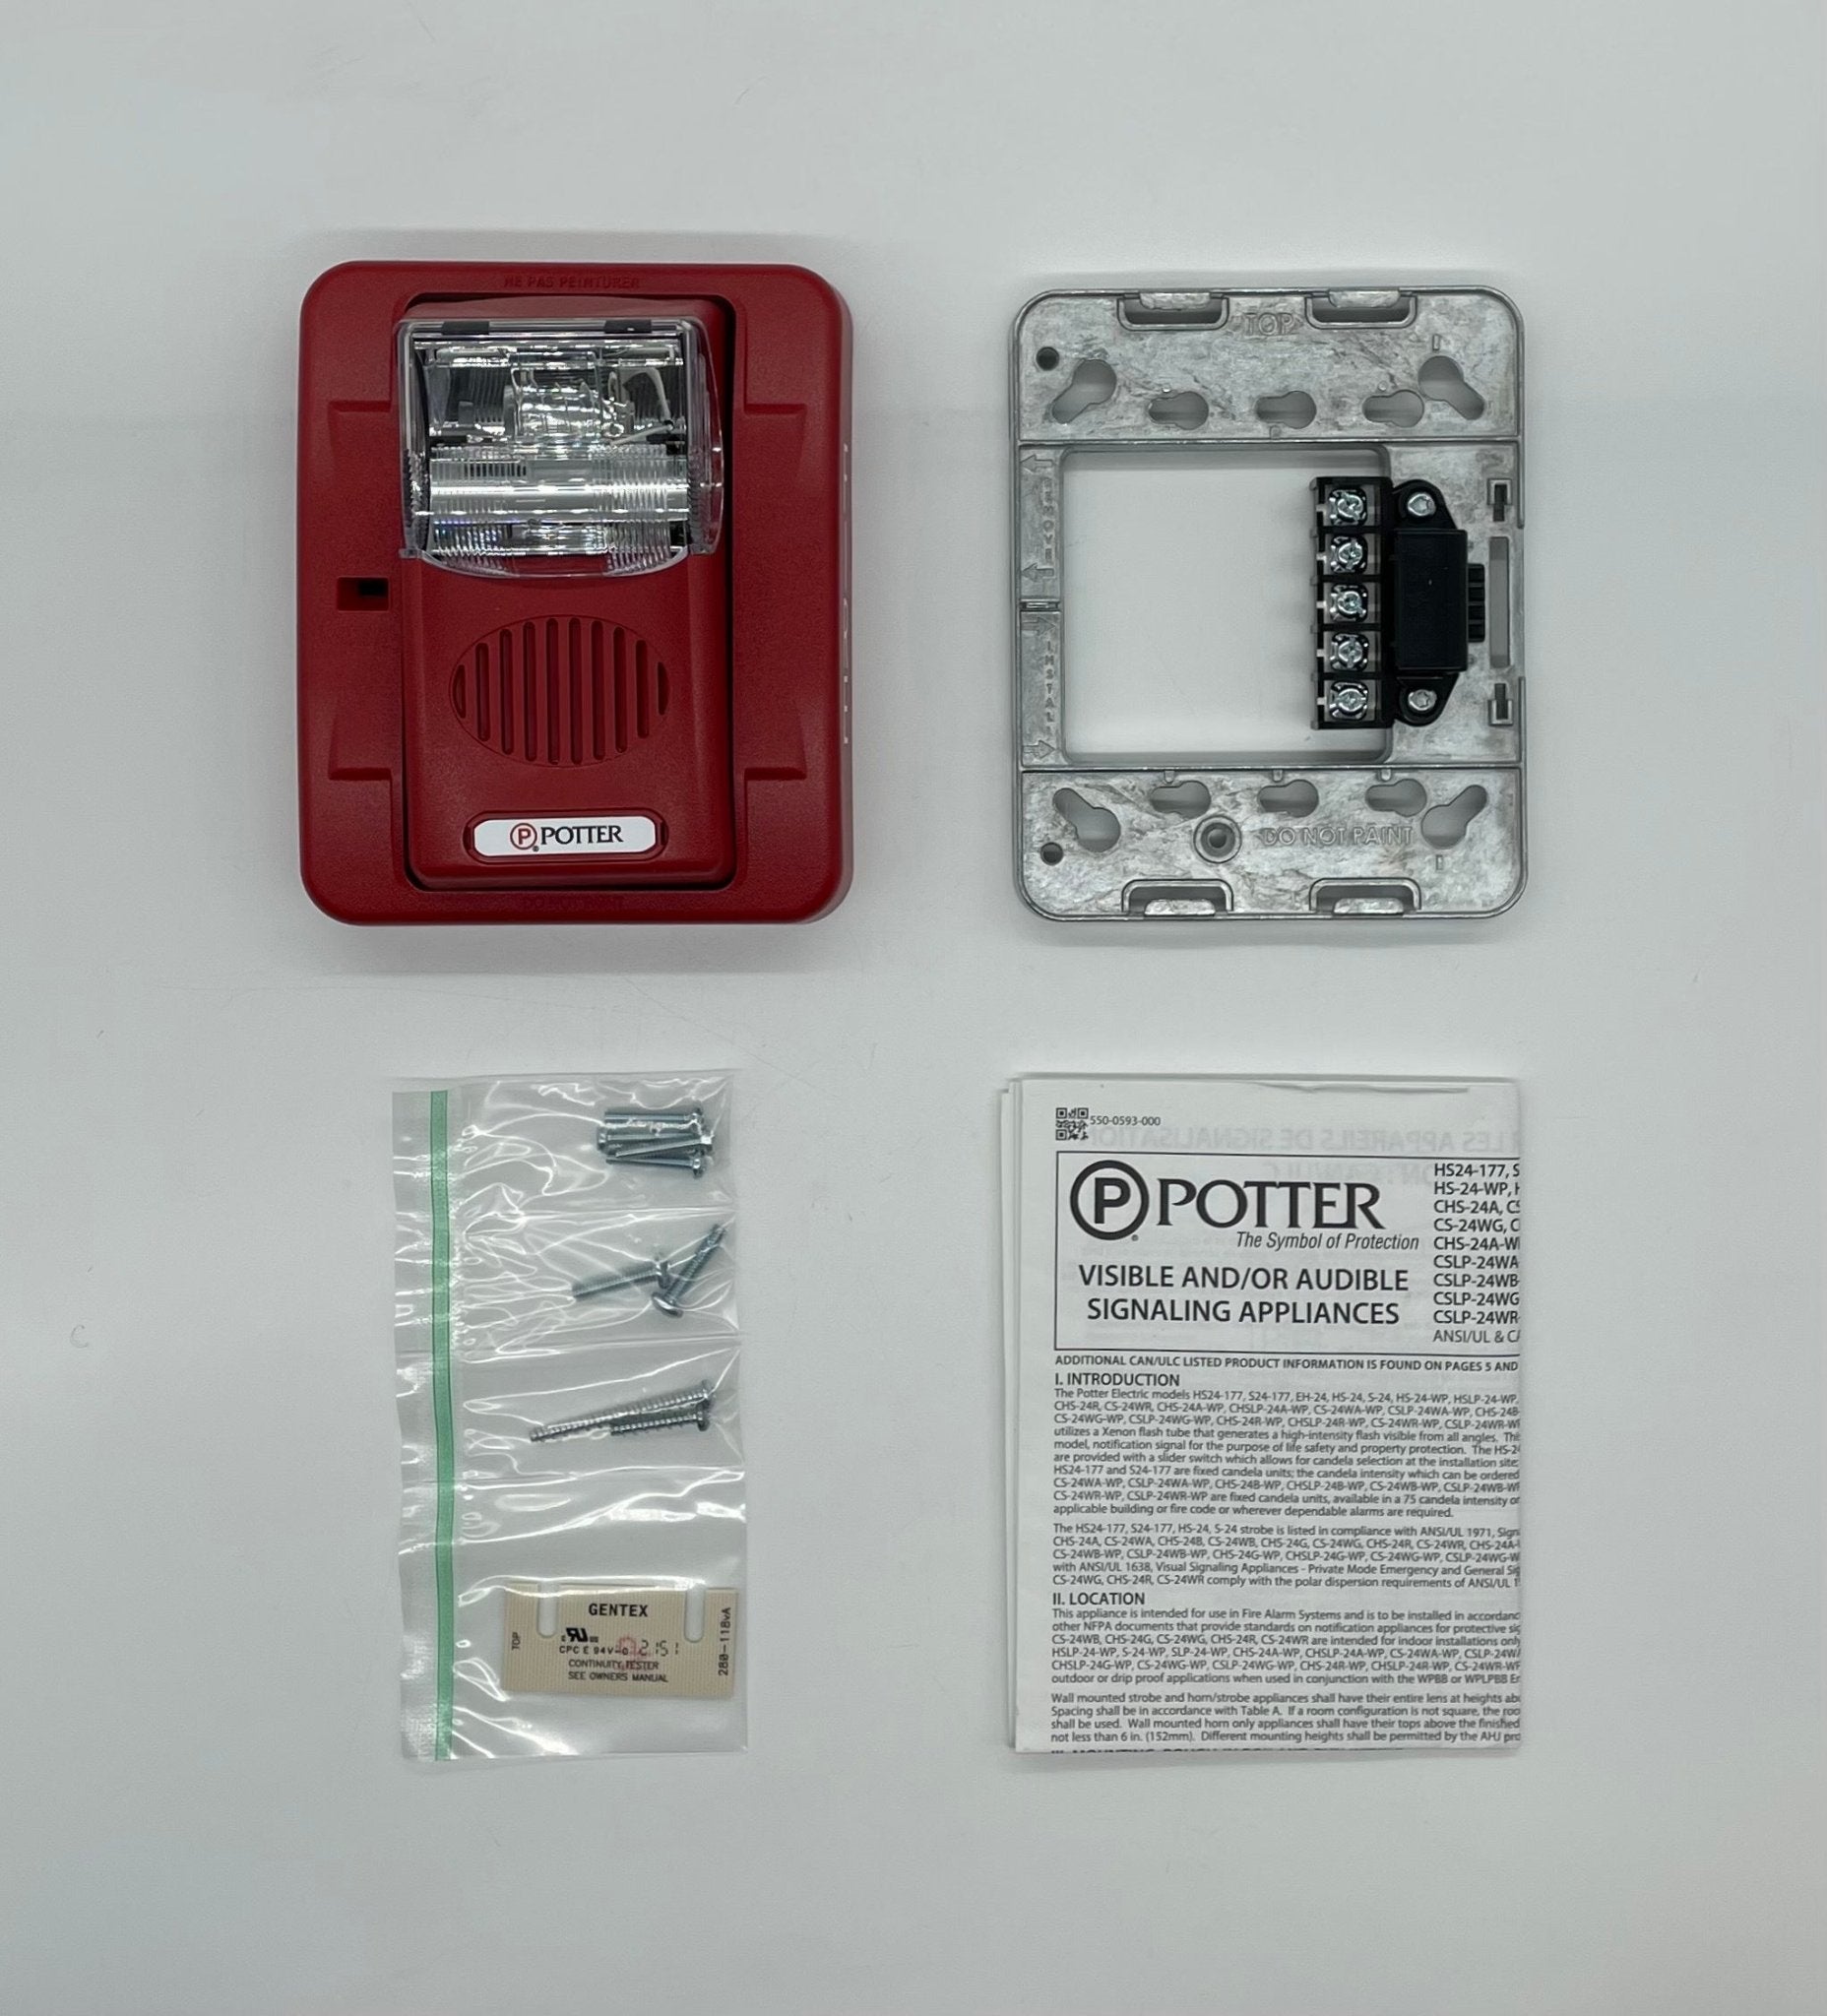 Potter HS-24WR - The Fire Alarm Supplier